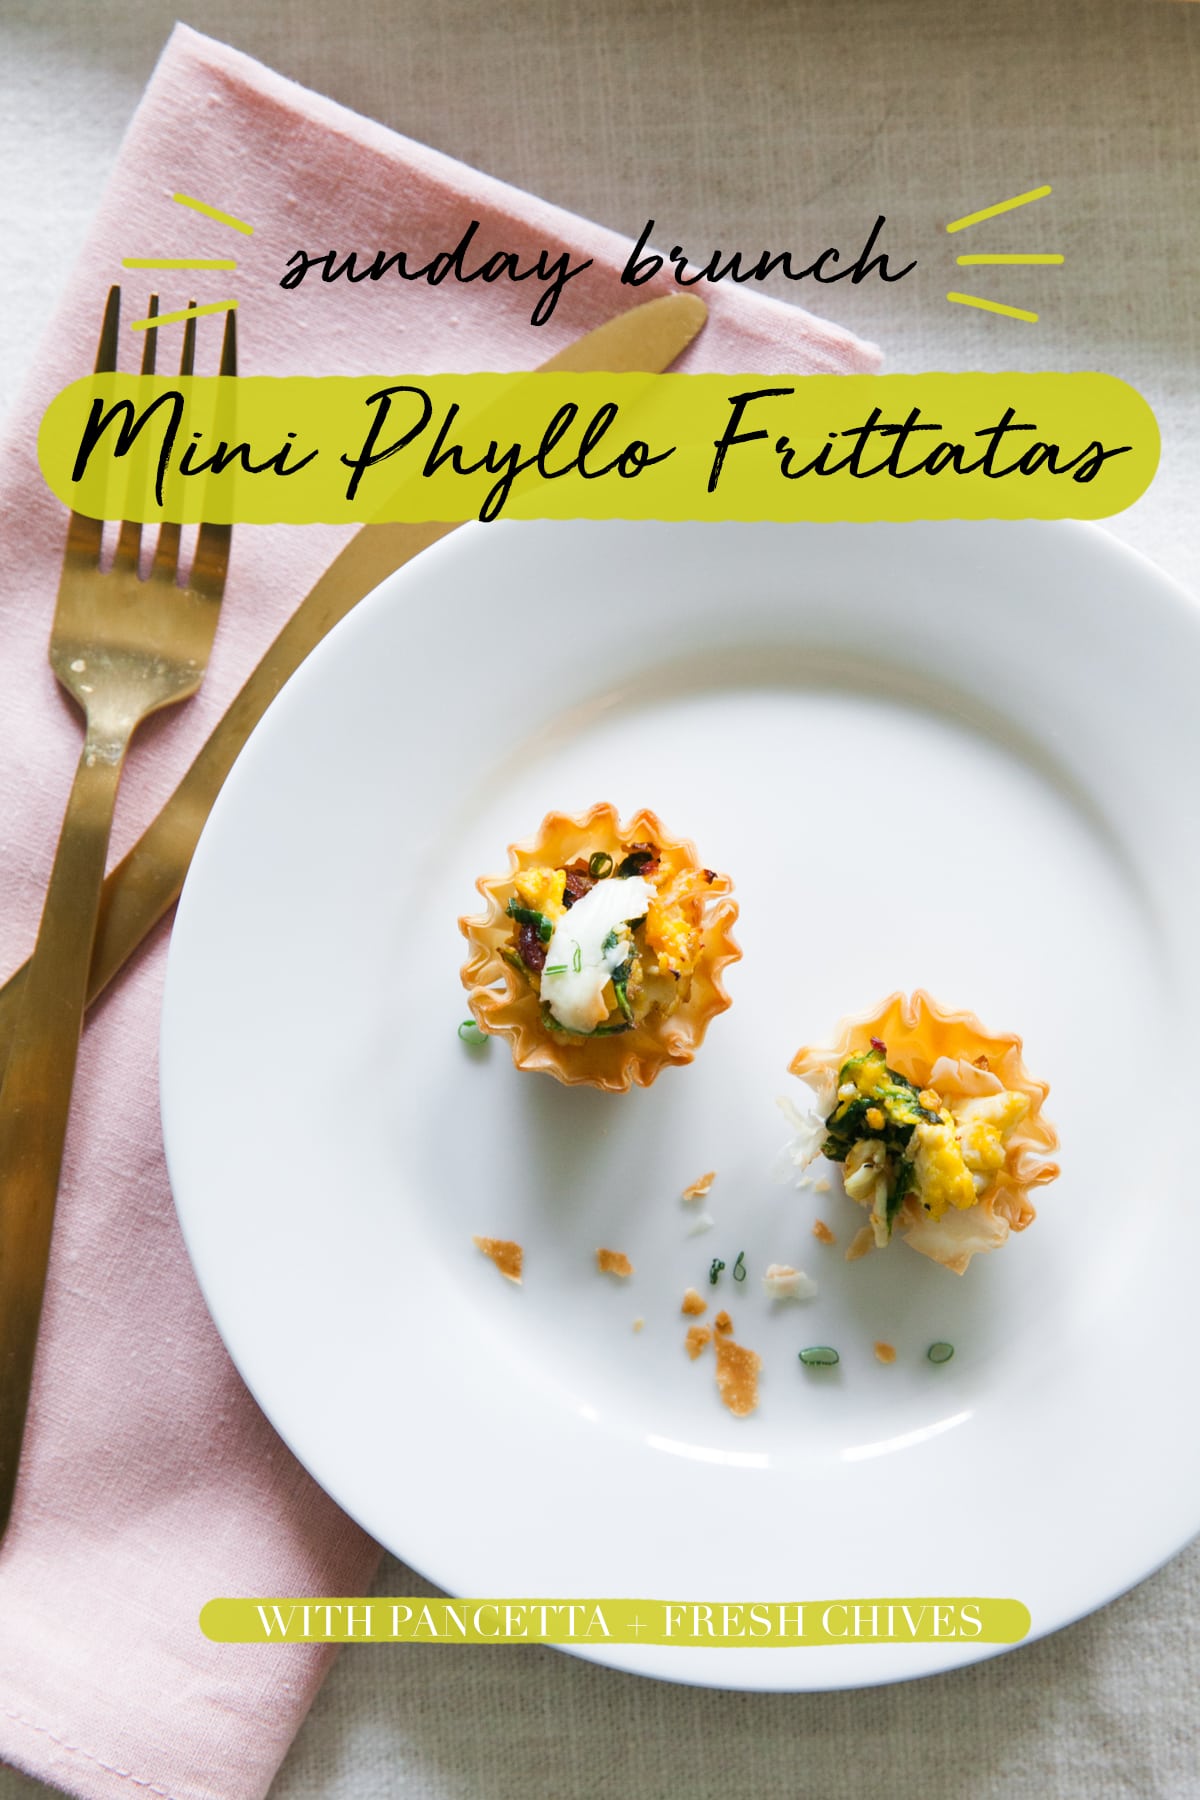 Sunday Brunch | Mini Phyllo Frittatas + Pancetta | Quick Brunch Recipes | Amuse Bouche Breakfast Foods | Jessica Brigham Magazine for Life